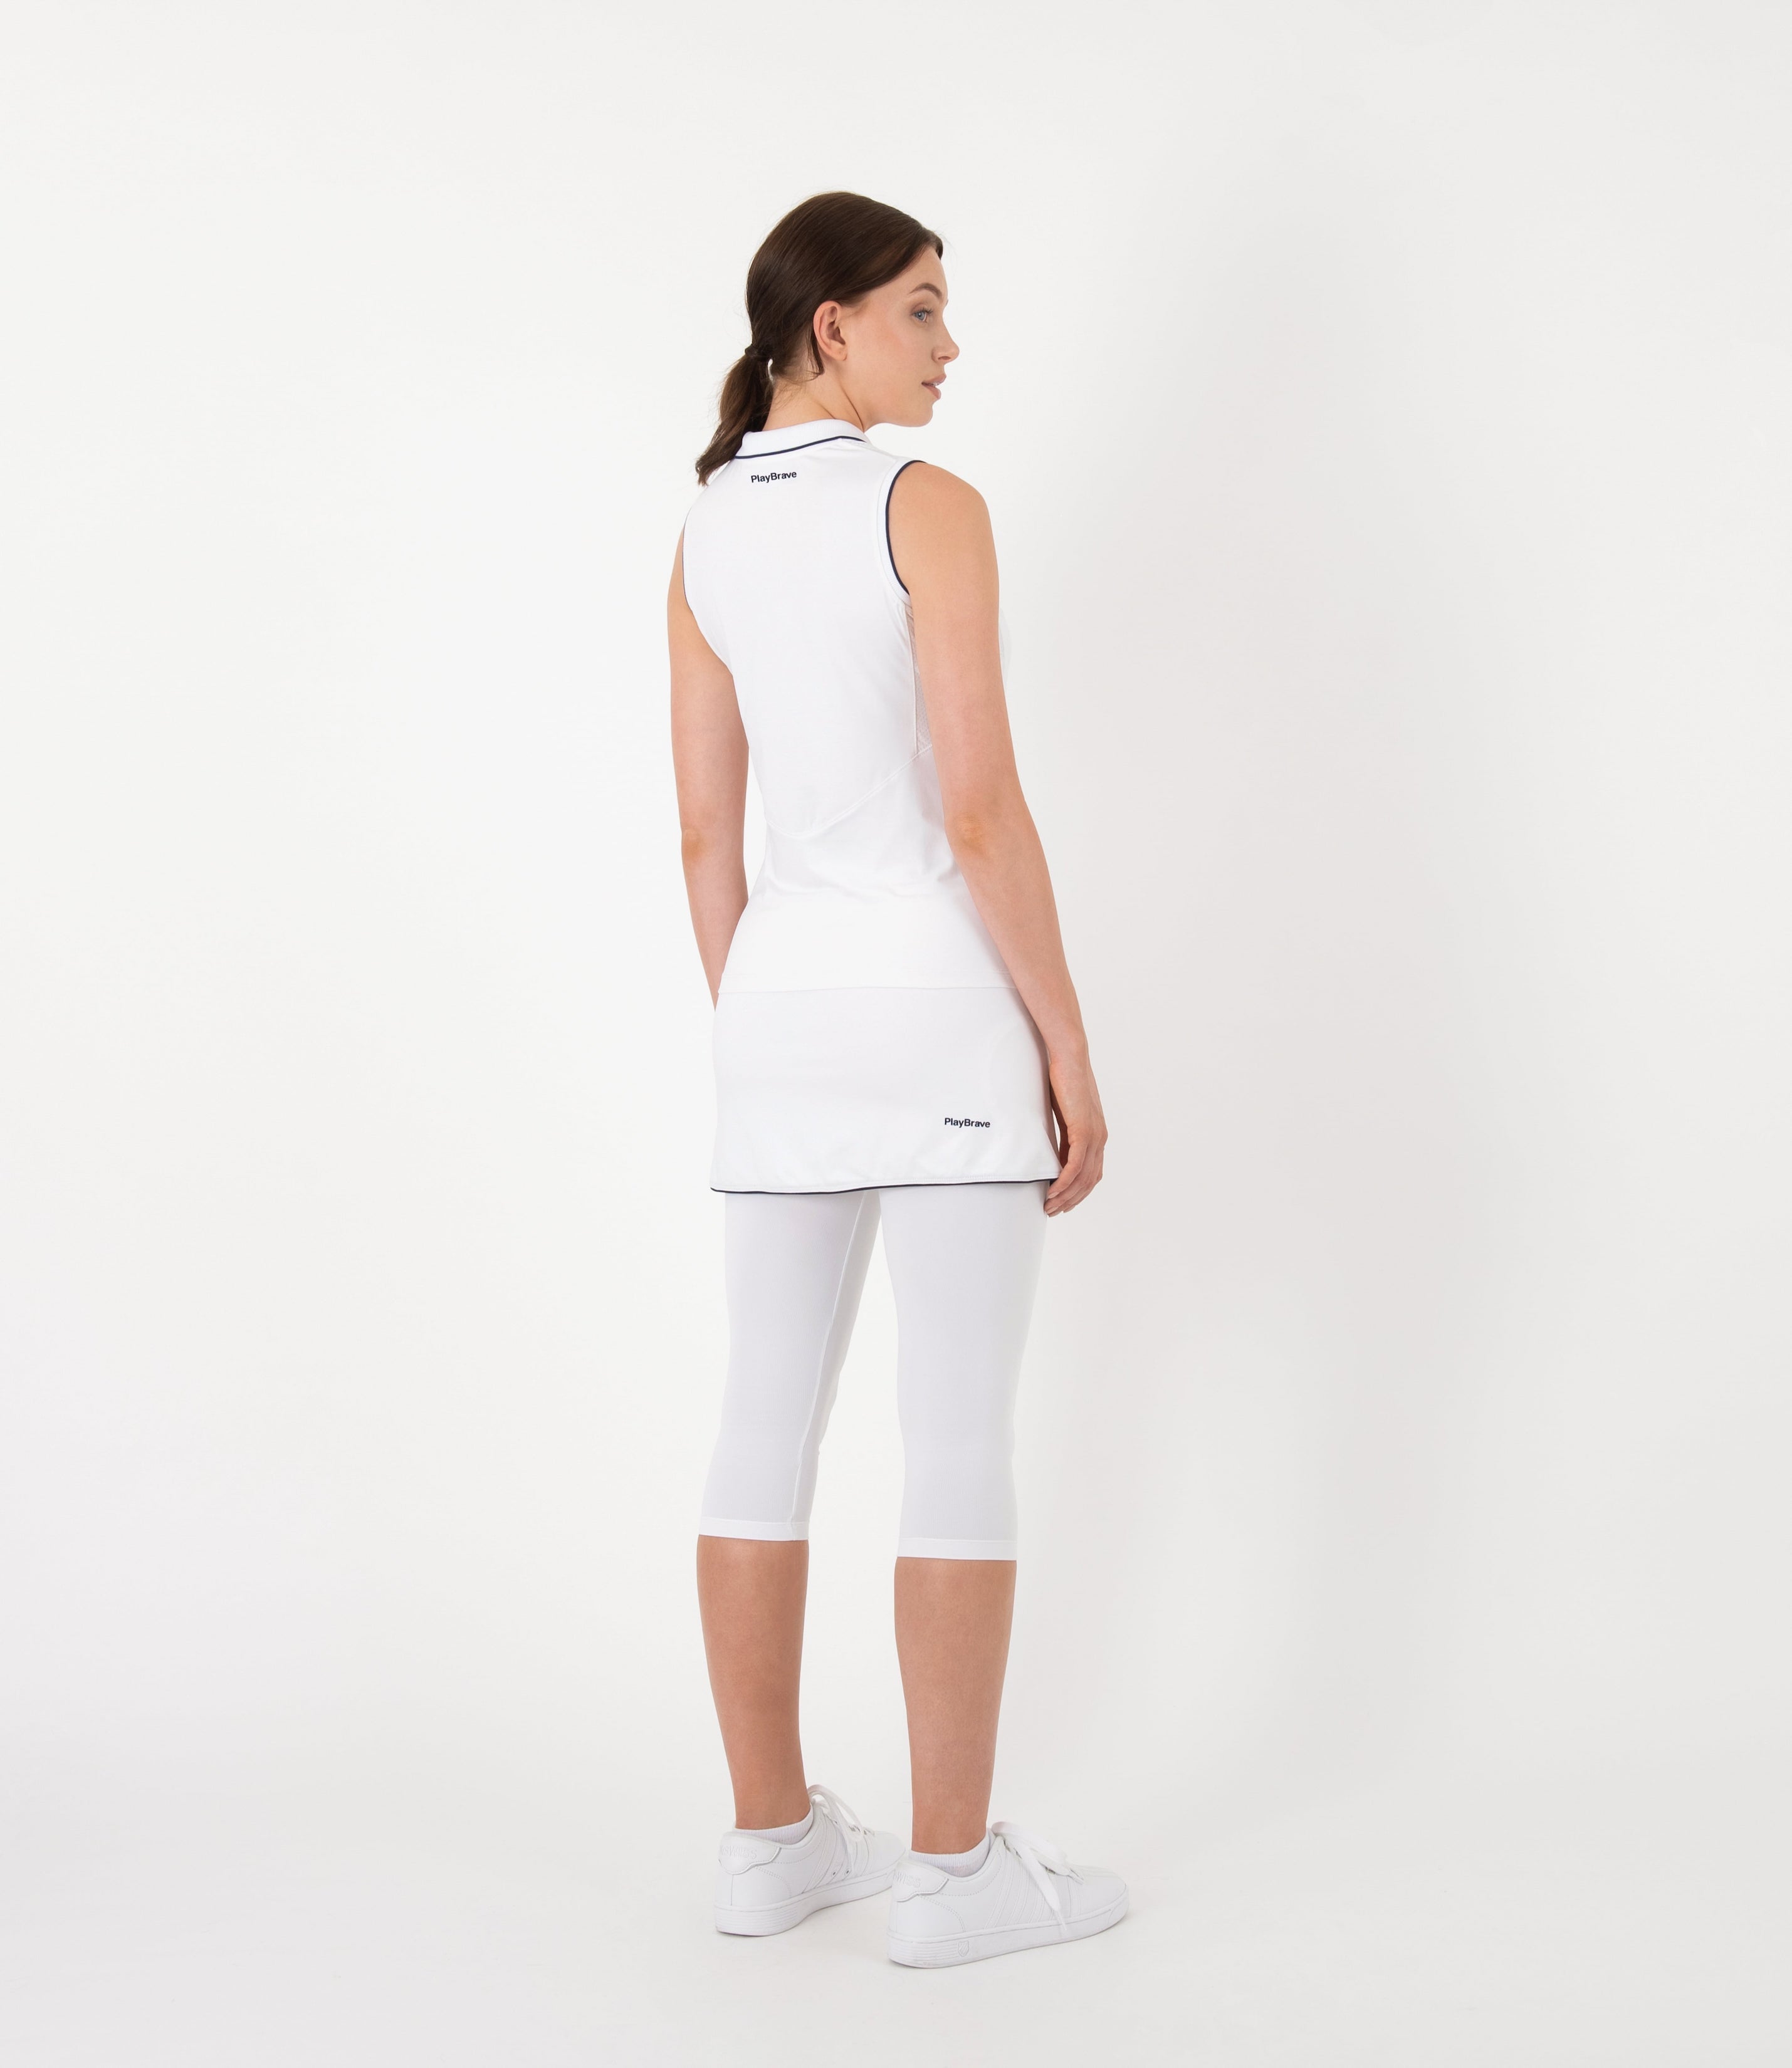 Camilla Womens Sleeveless Golf Polo - White/Navy | PlayBrave Sportswear